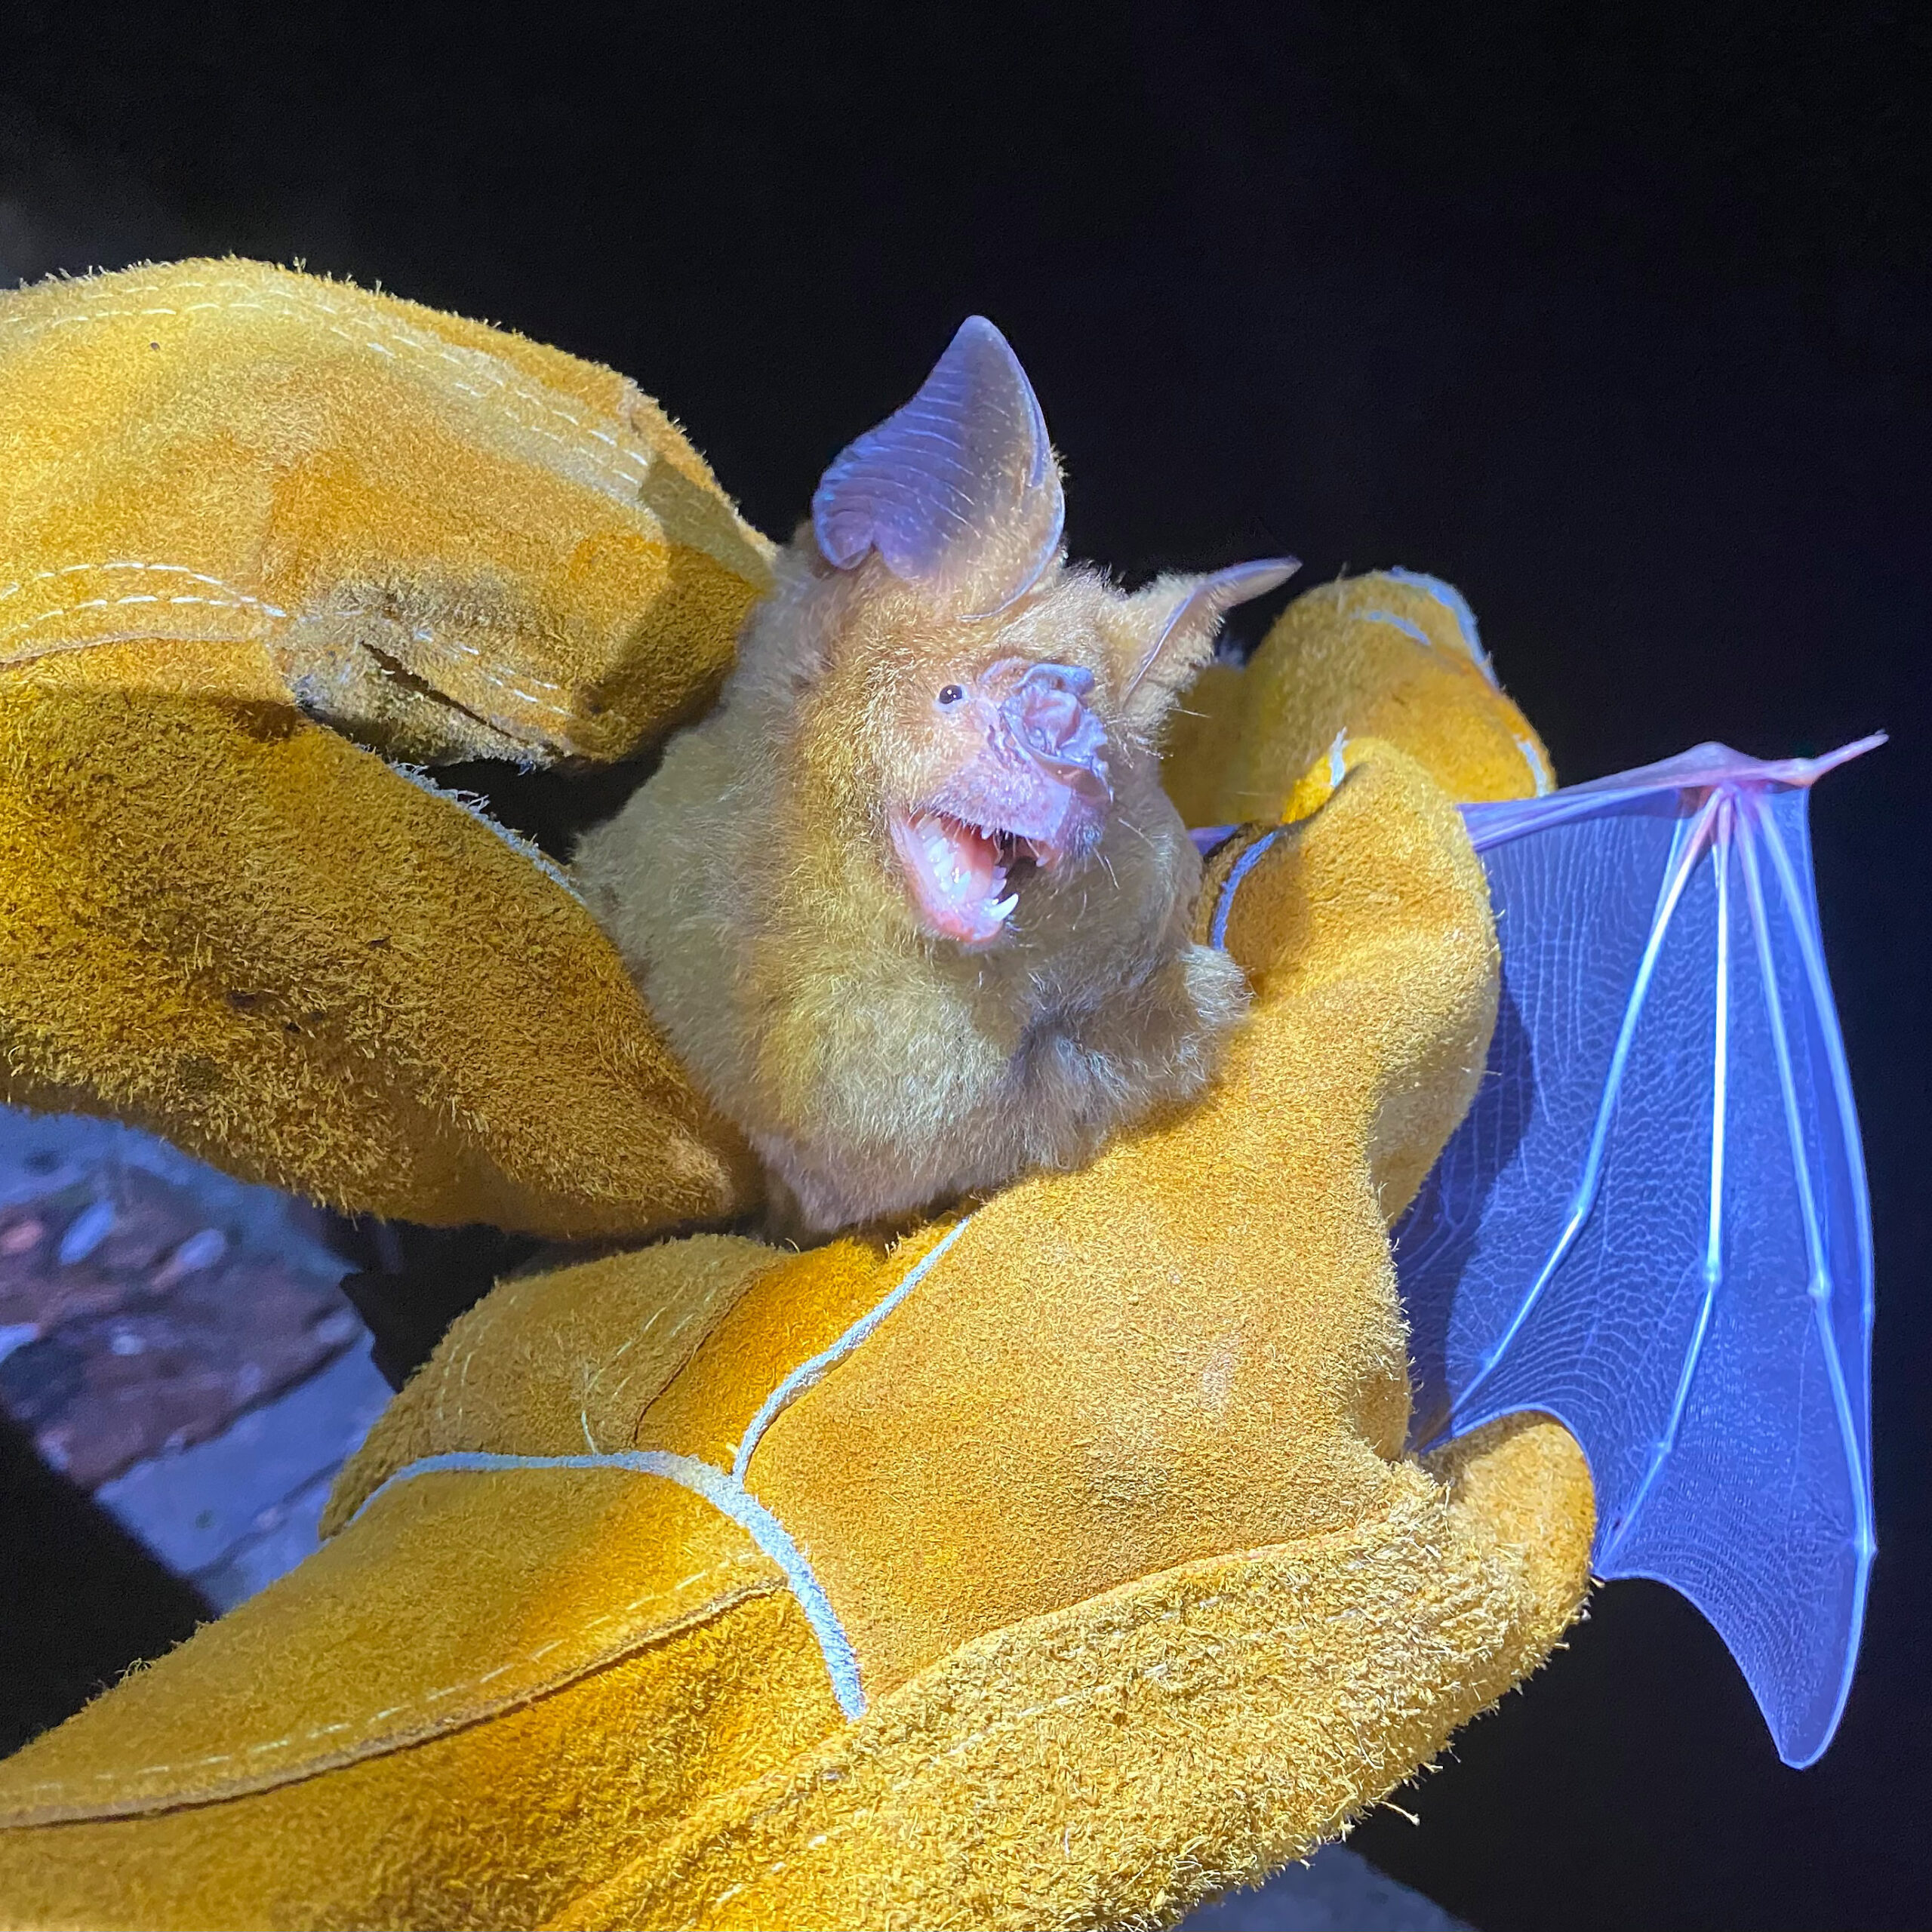 horshoe bat specimen